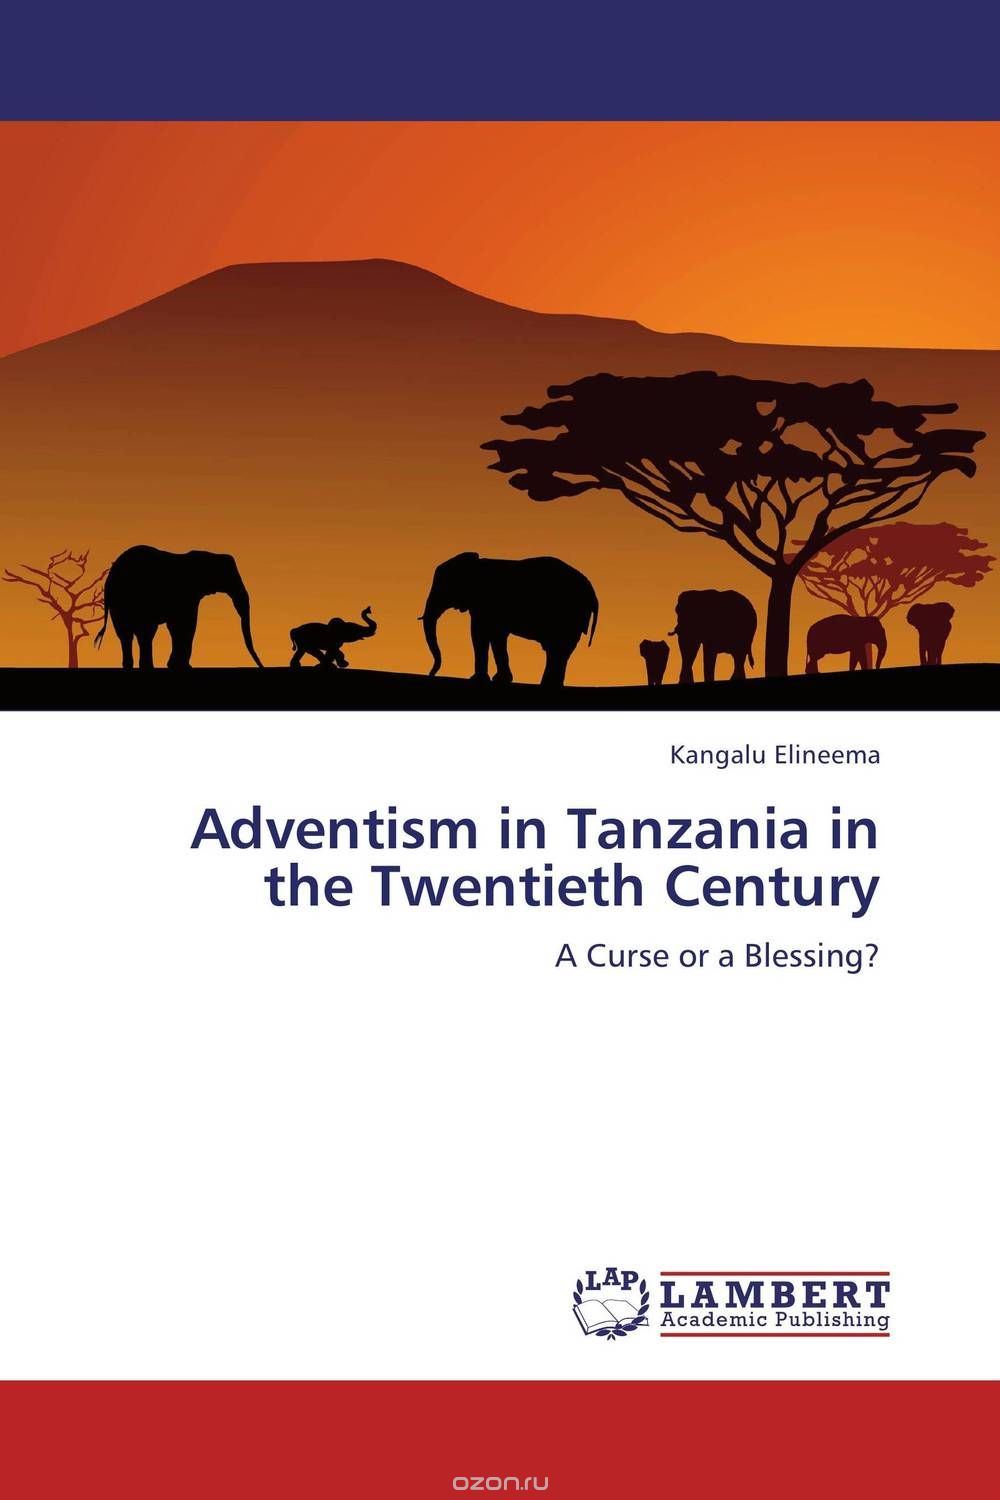 Скачать книгу "Adventism in Tanzania in the Twentieth Century"